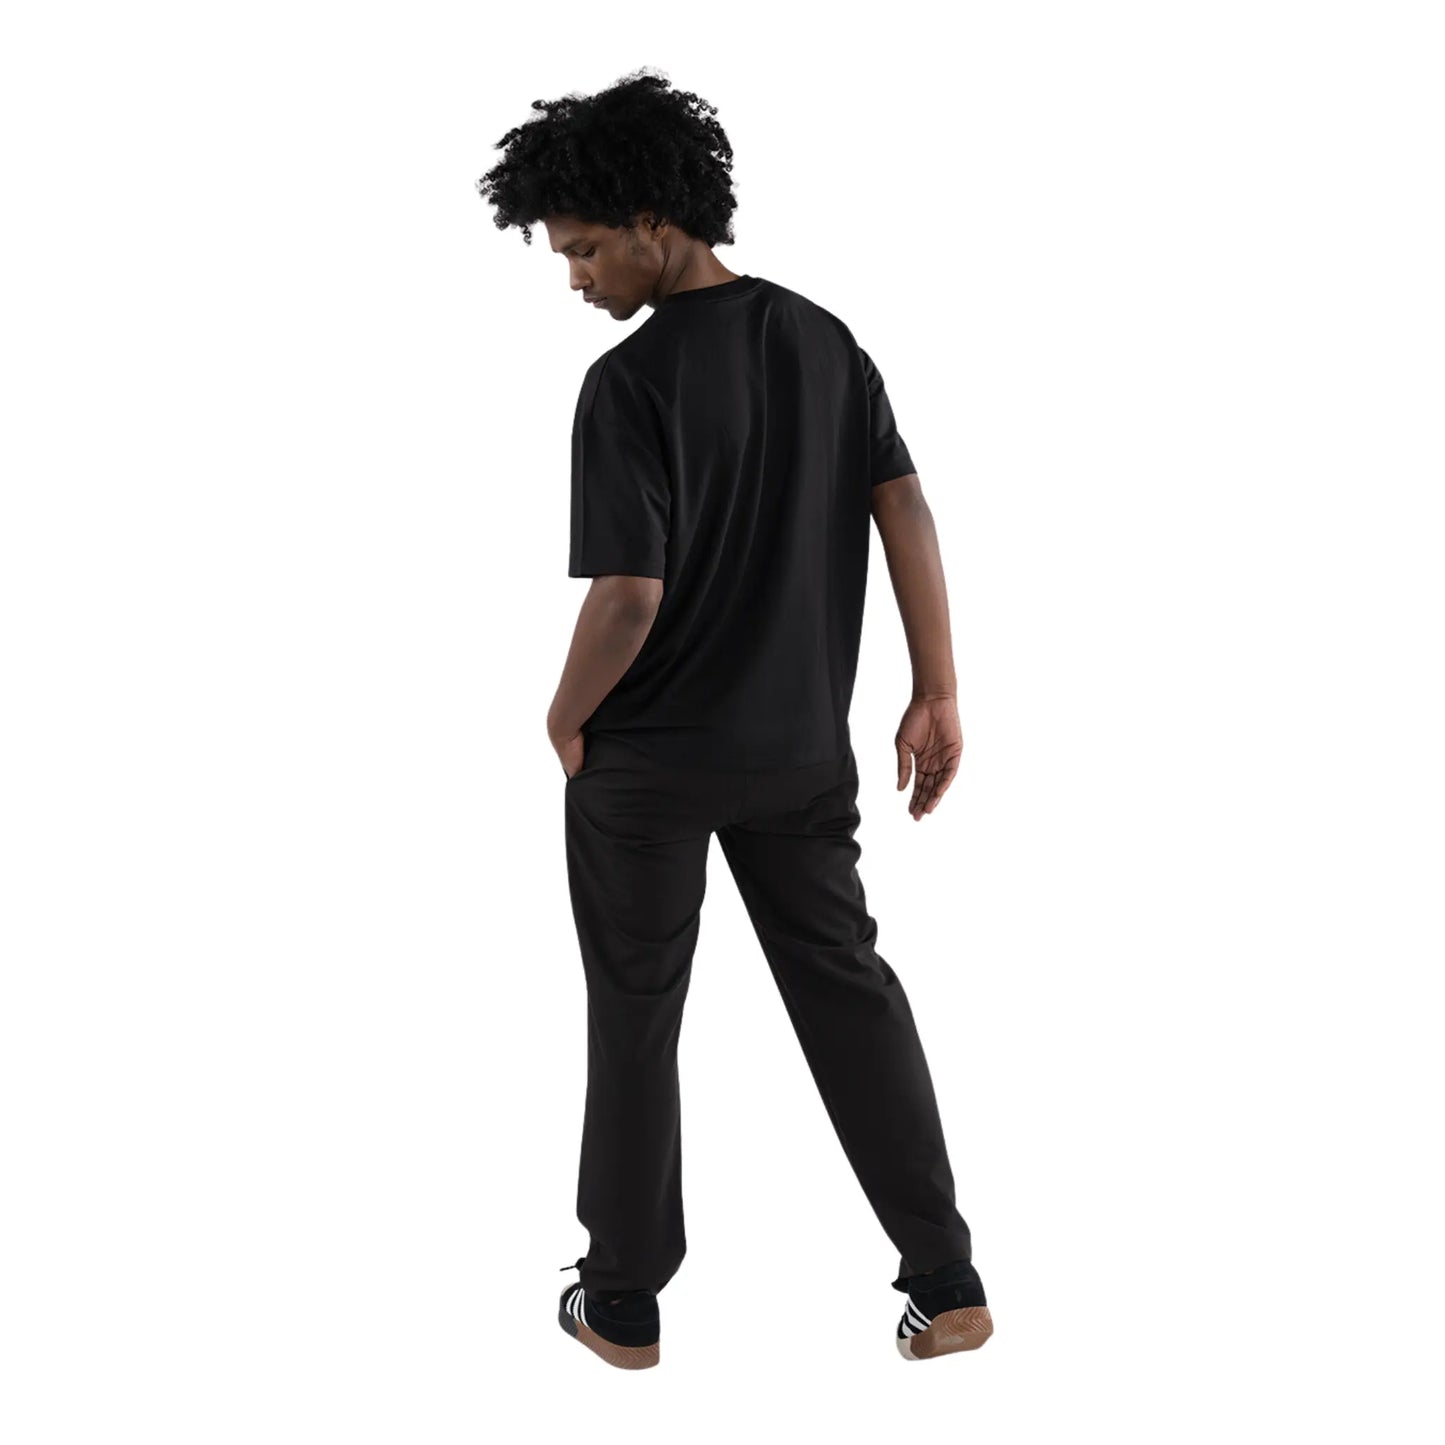 Oversized T-shirt Black worn by black man back view